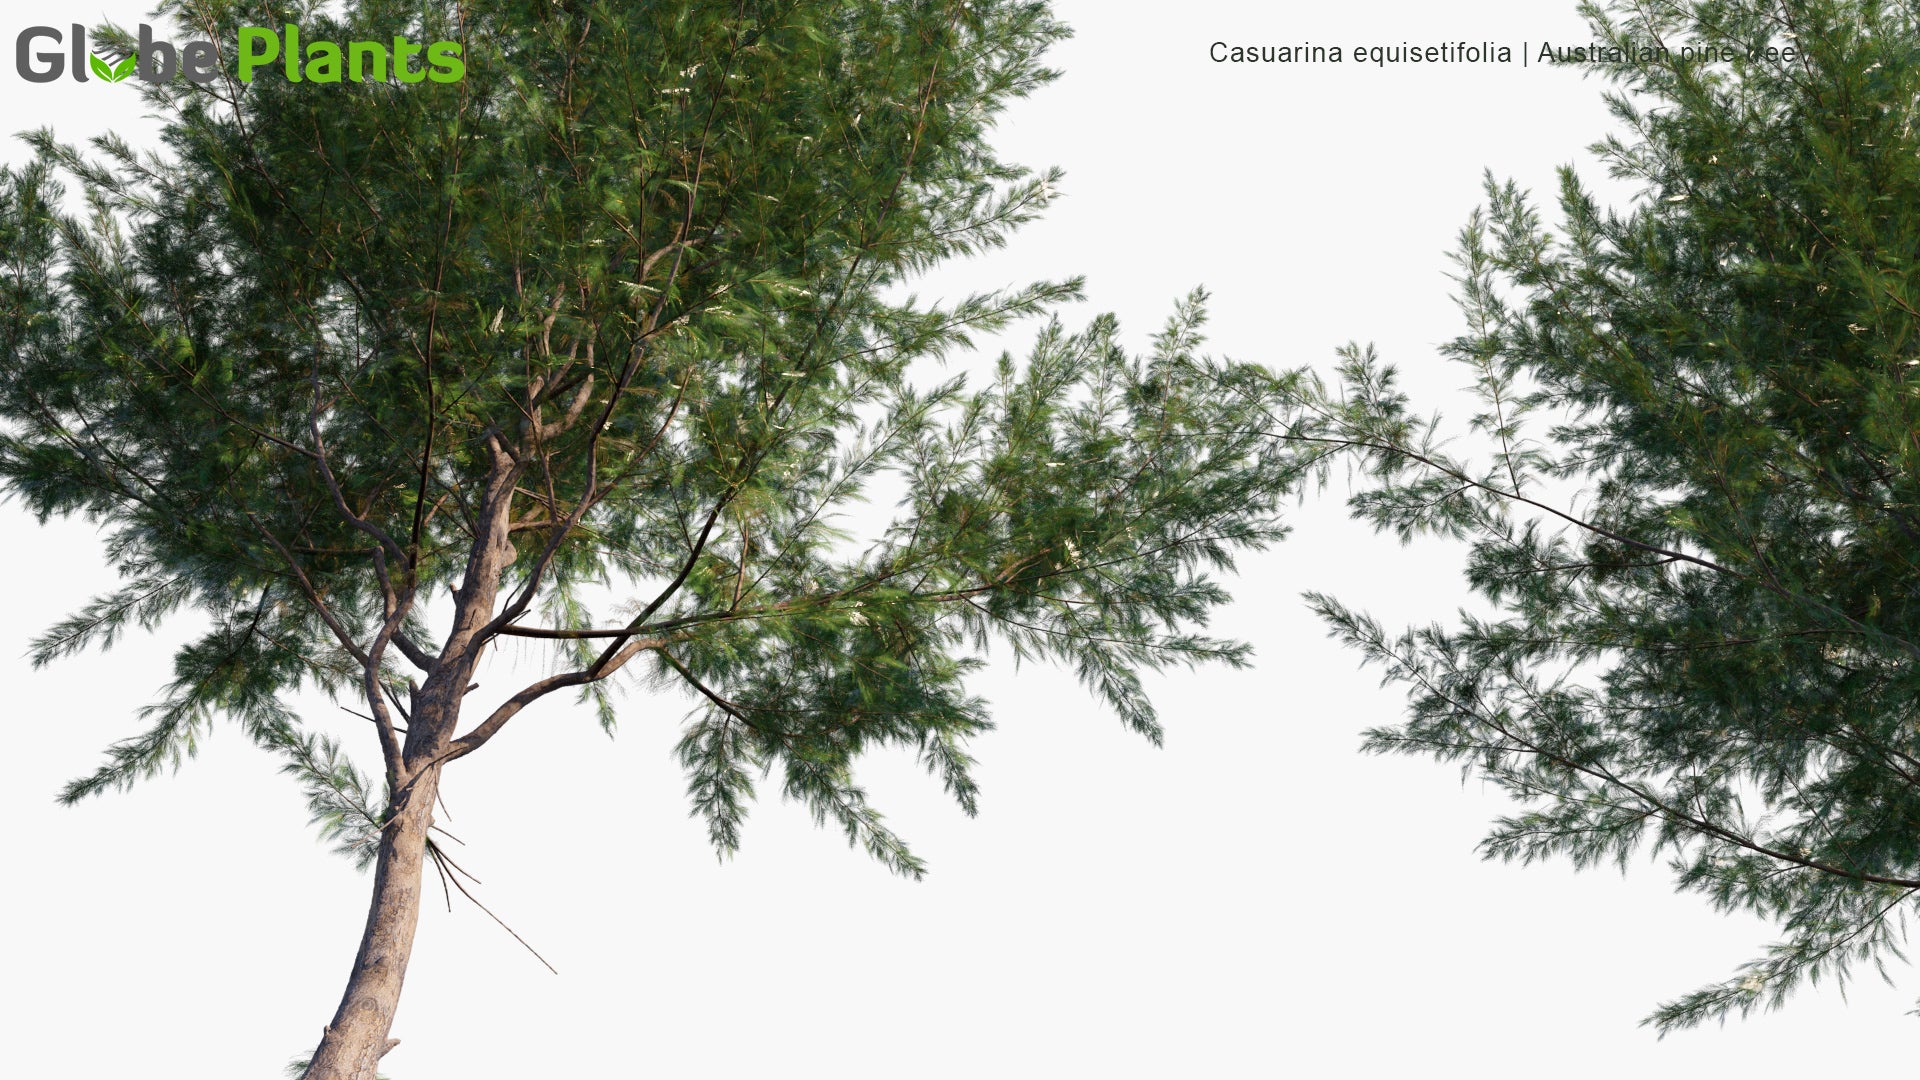 Casuarina Equisetifolia - Australian Pine Tree, Whistling Pine Tree